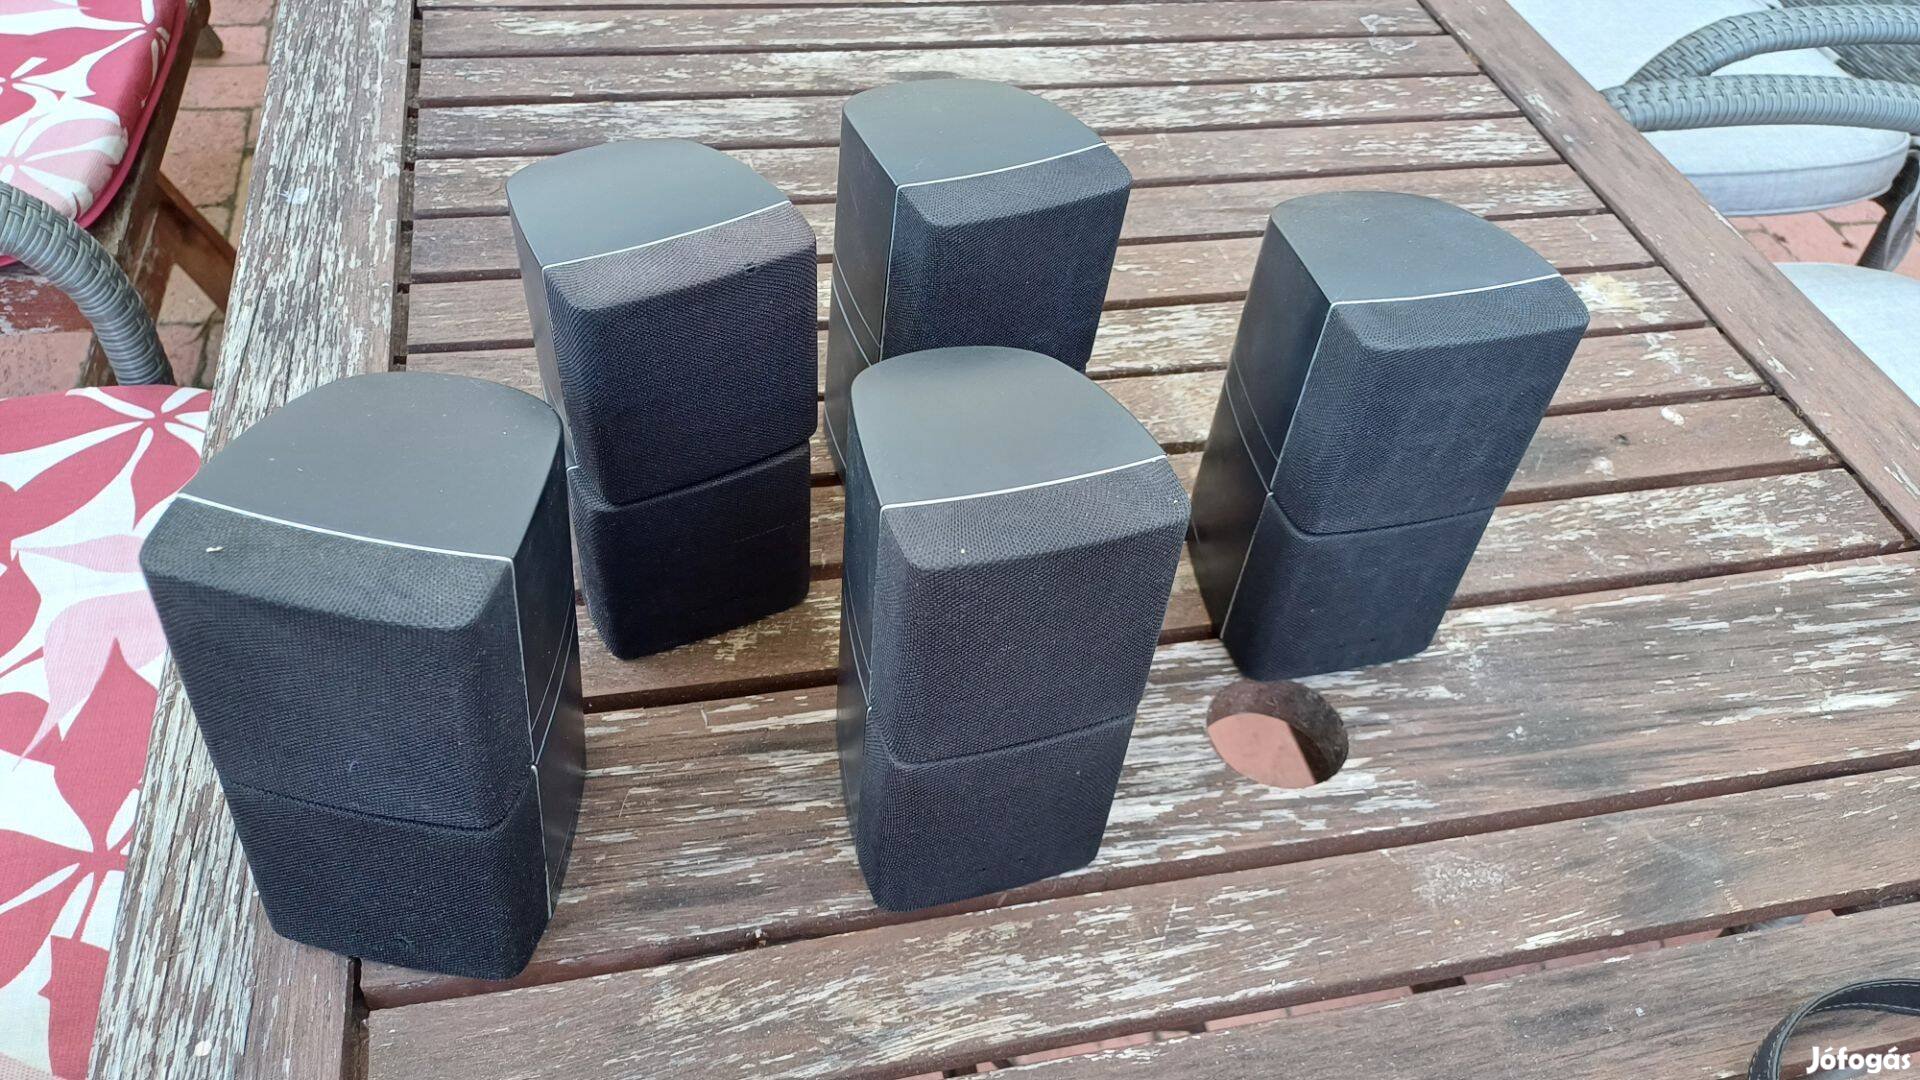 Bose style double cube hangfalak!